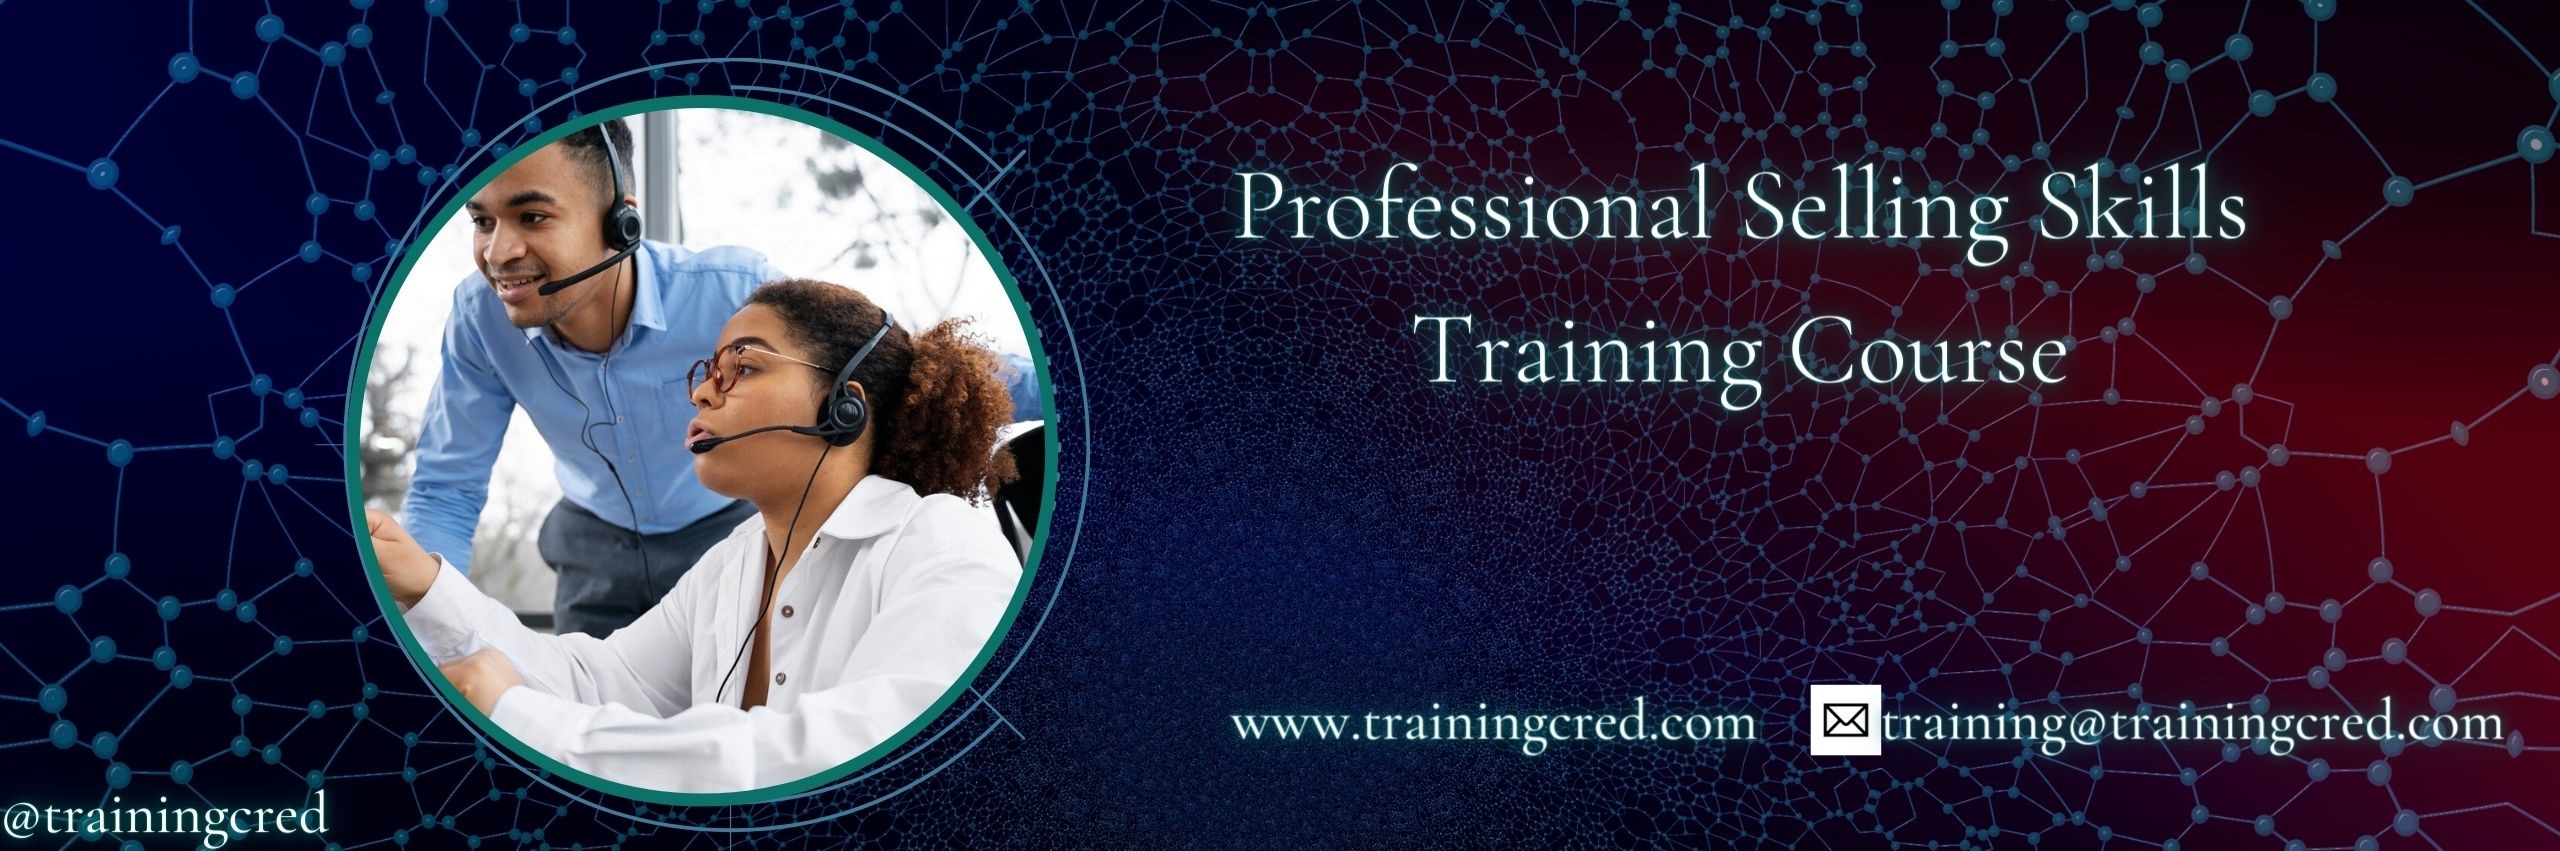 Professional Selling Skills Training